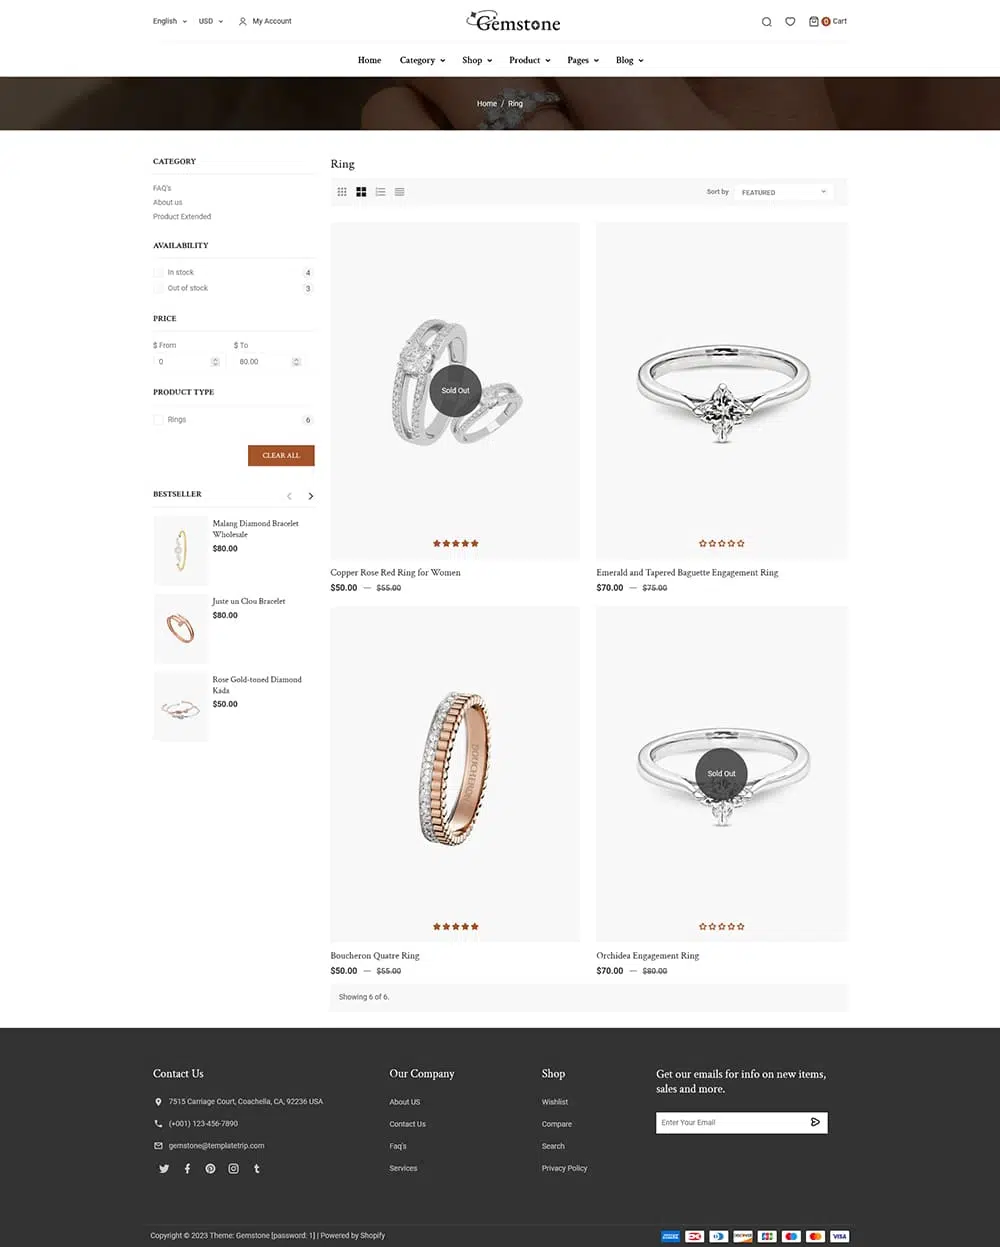 Gemstone - Modern Shopify Theme for Jewelry & Imitation Store